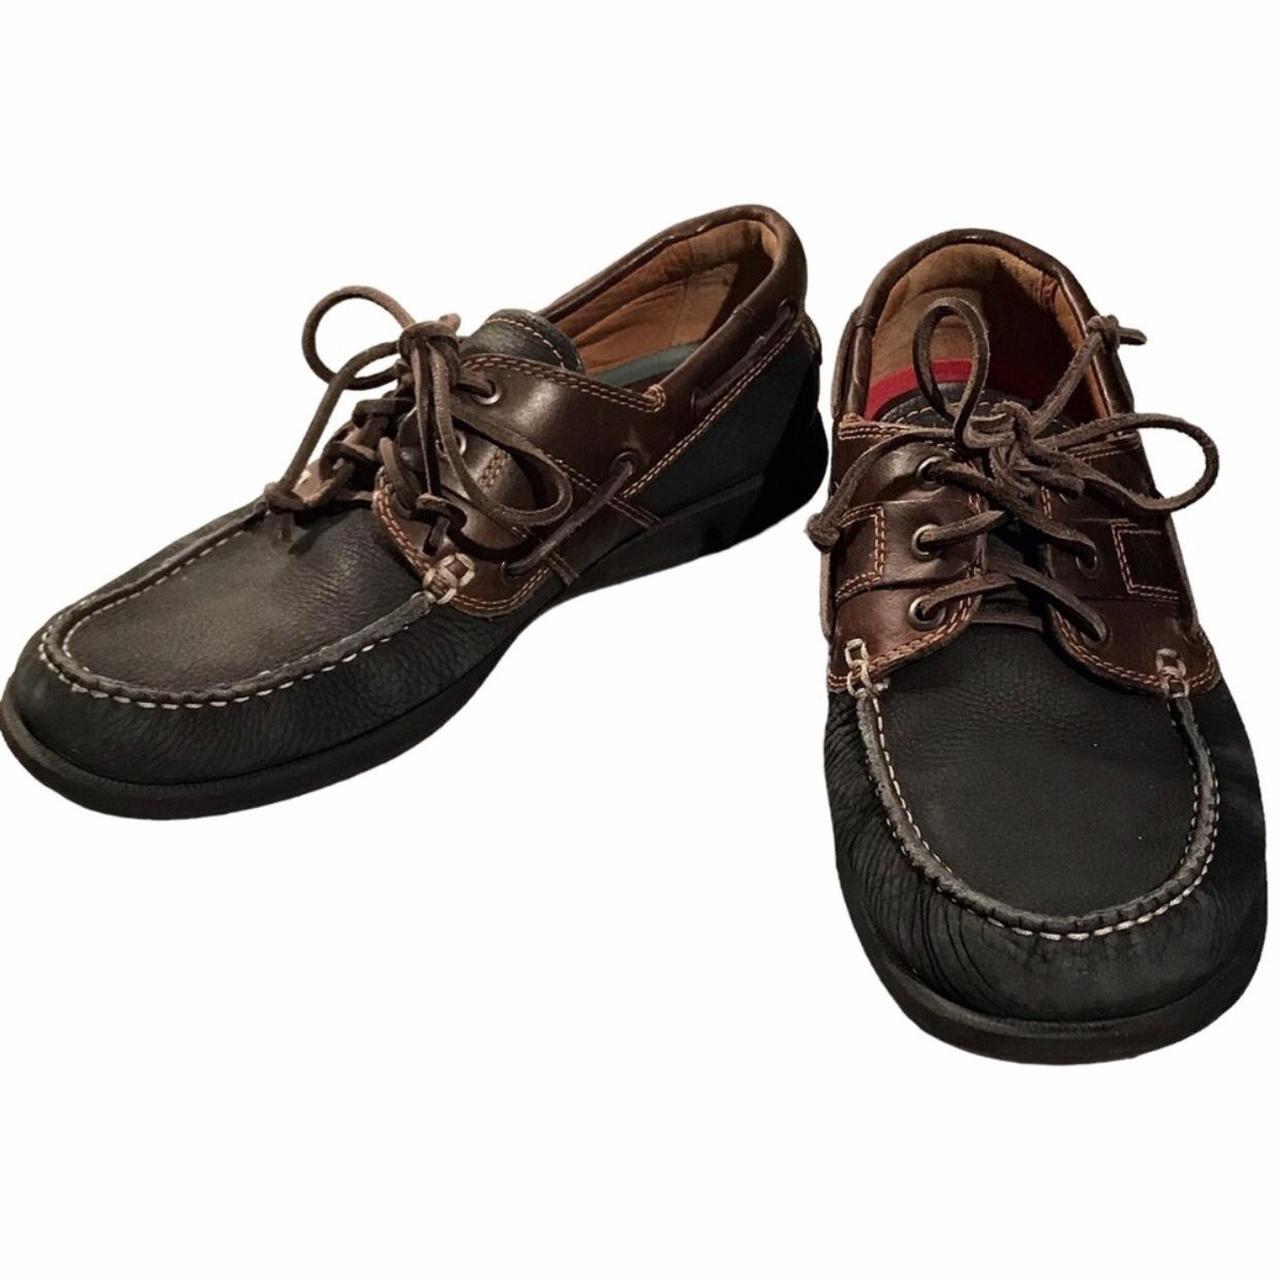 ECCO Men's Navy and Brown Boat-shoes | Depop